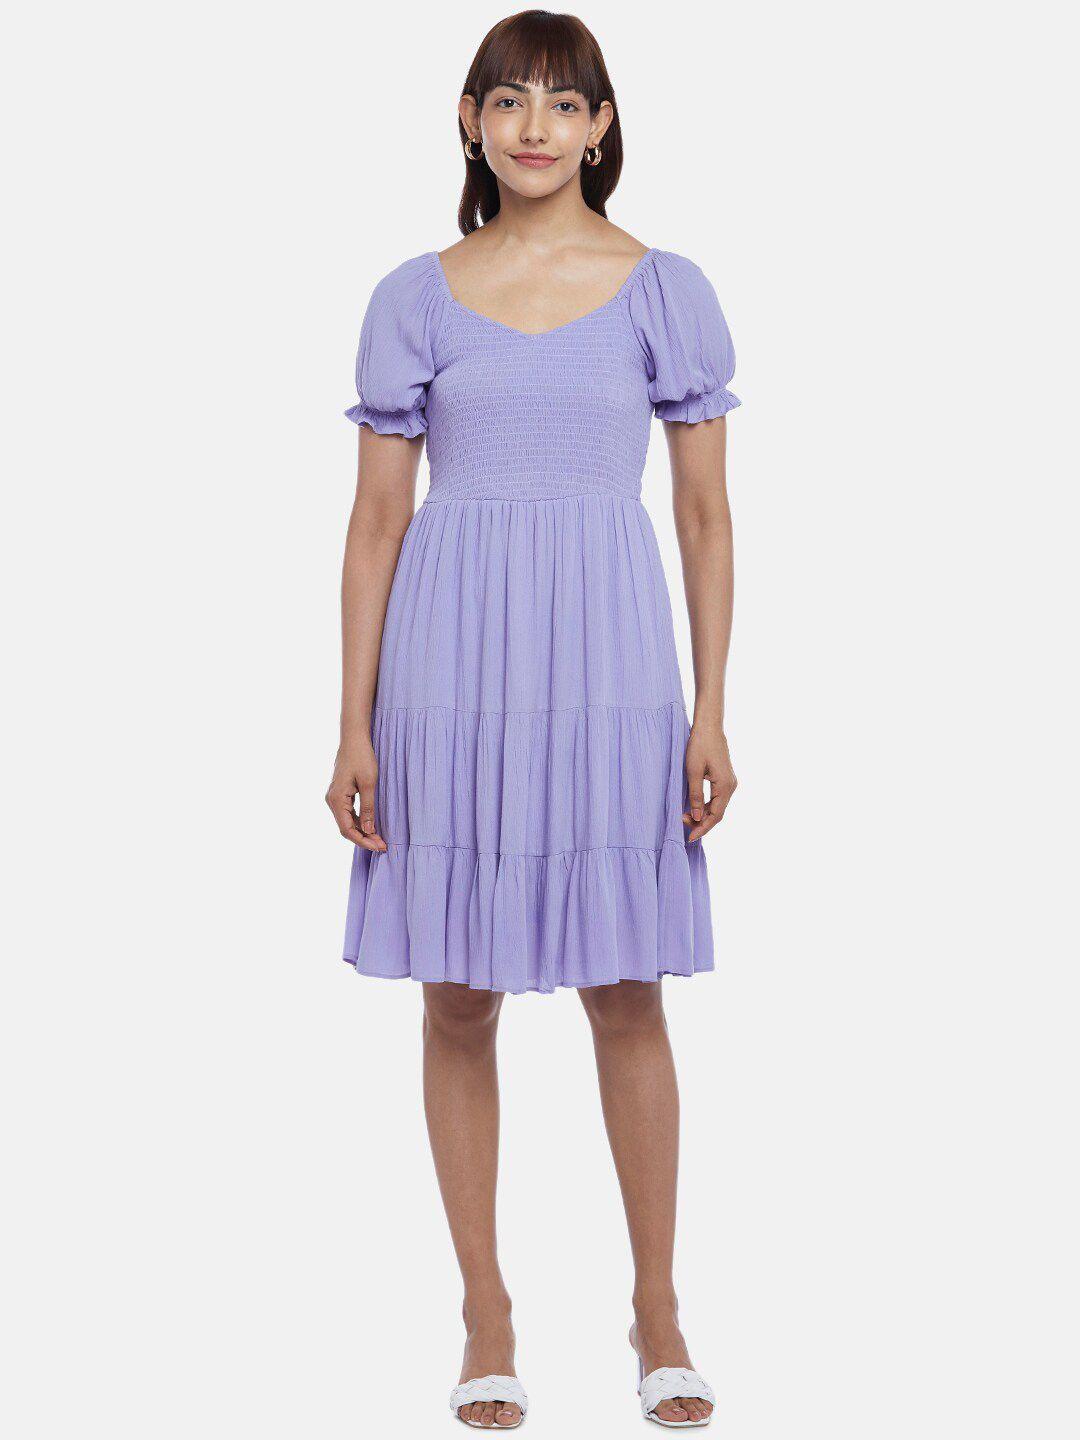 honey by pantaloons purple dress